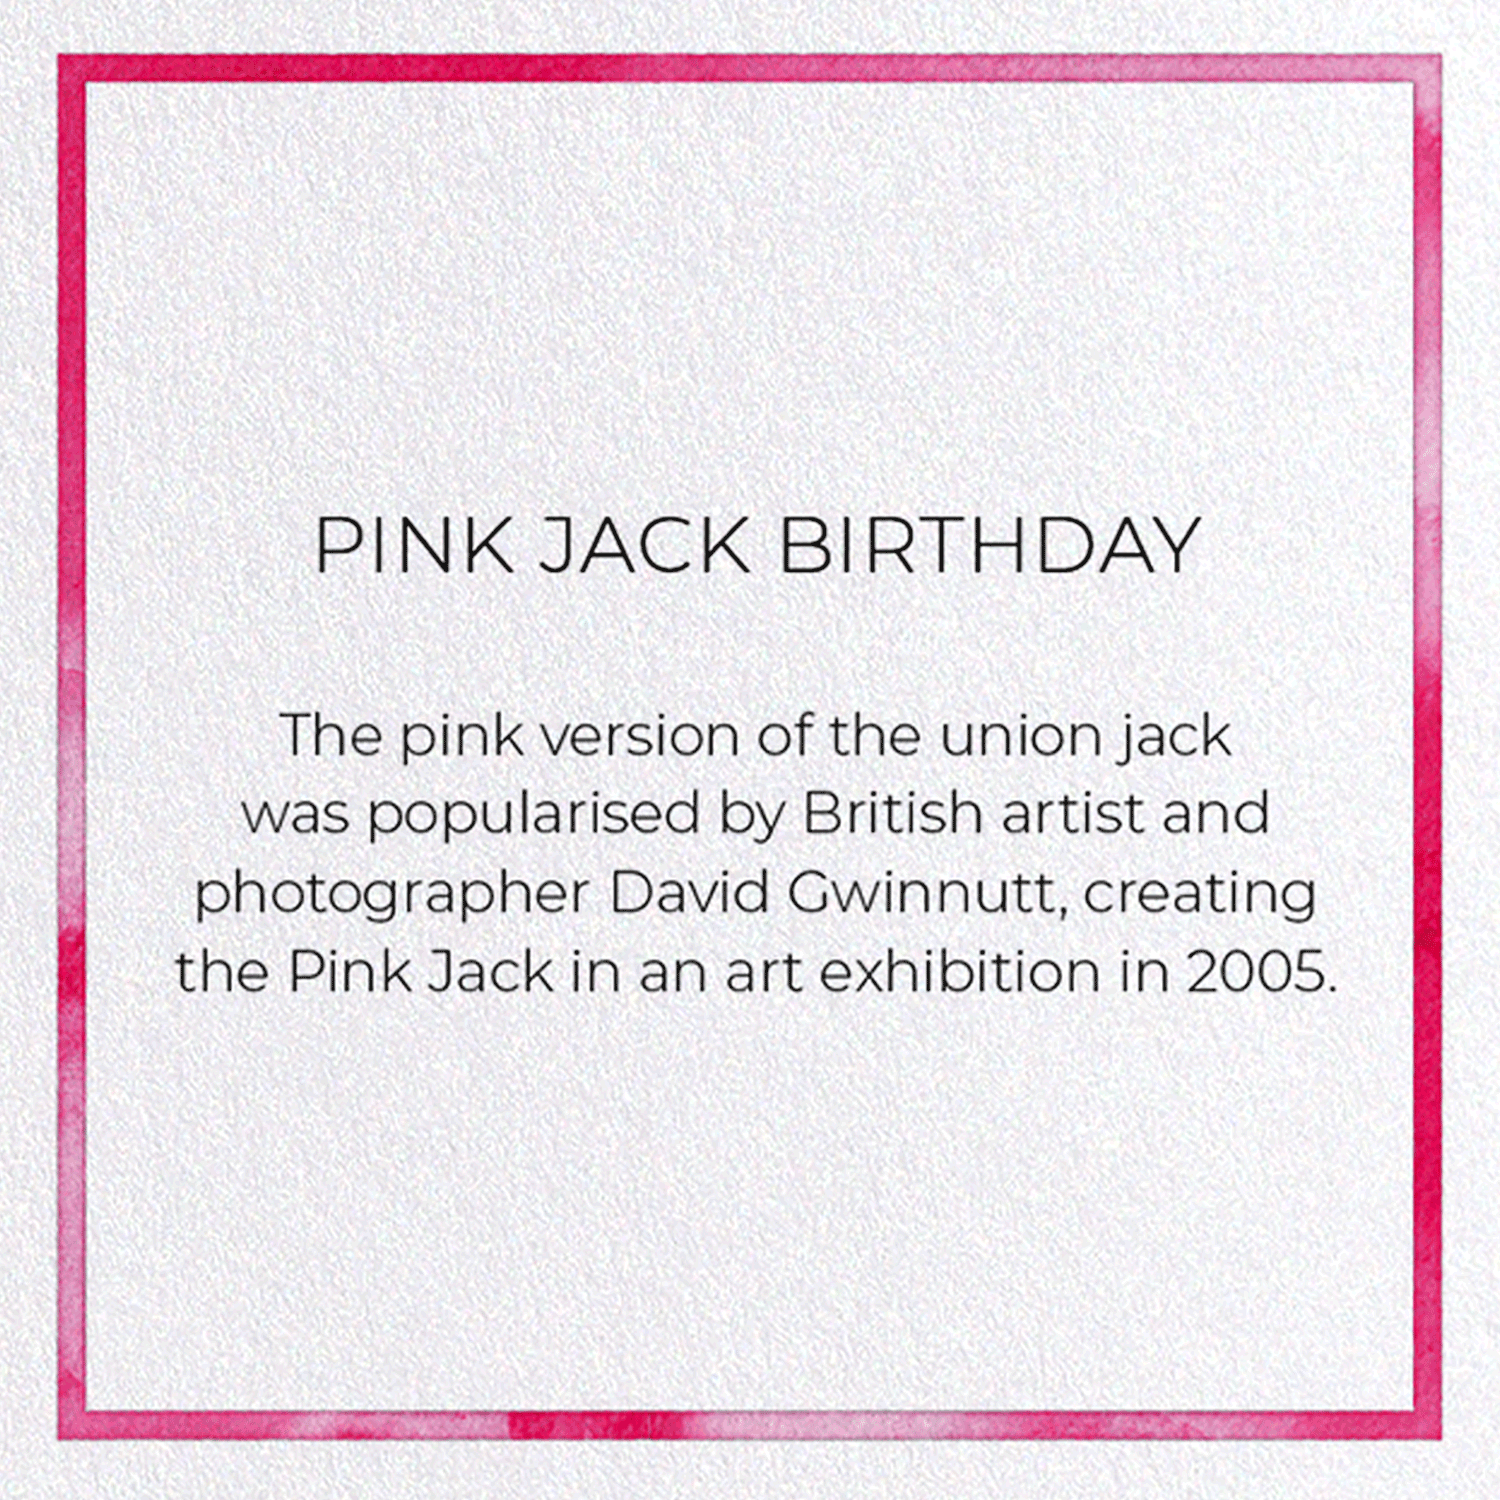 PINK JACK BIRTHDAY